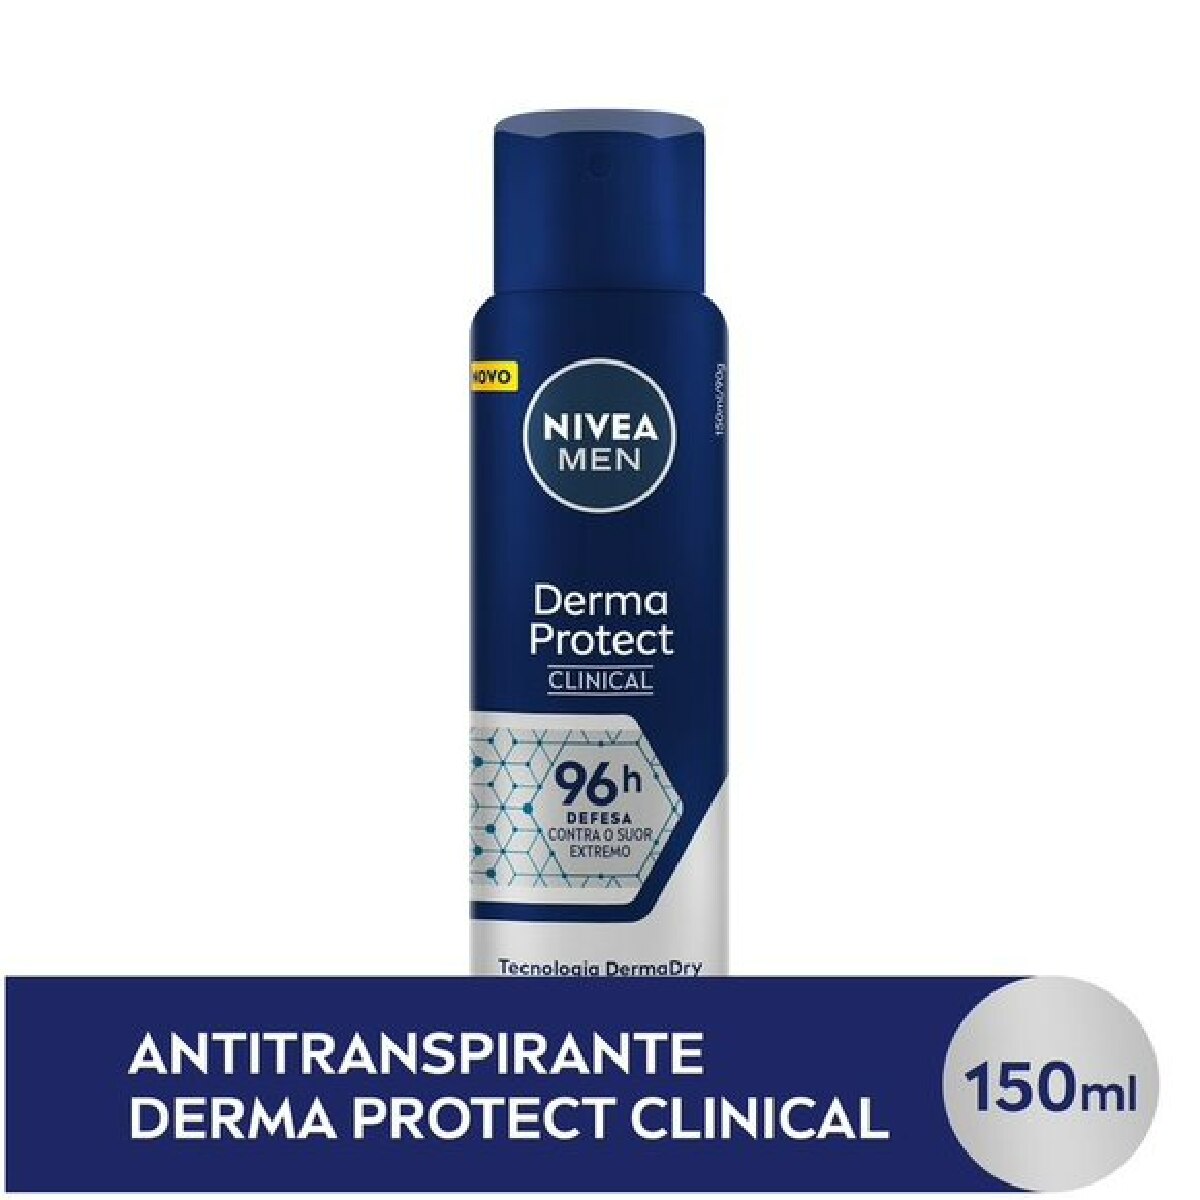 Antitranspirante Aerosol Nivea Men Derma Protect Clinical 150ml